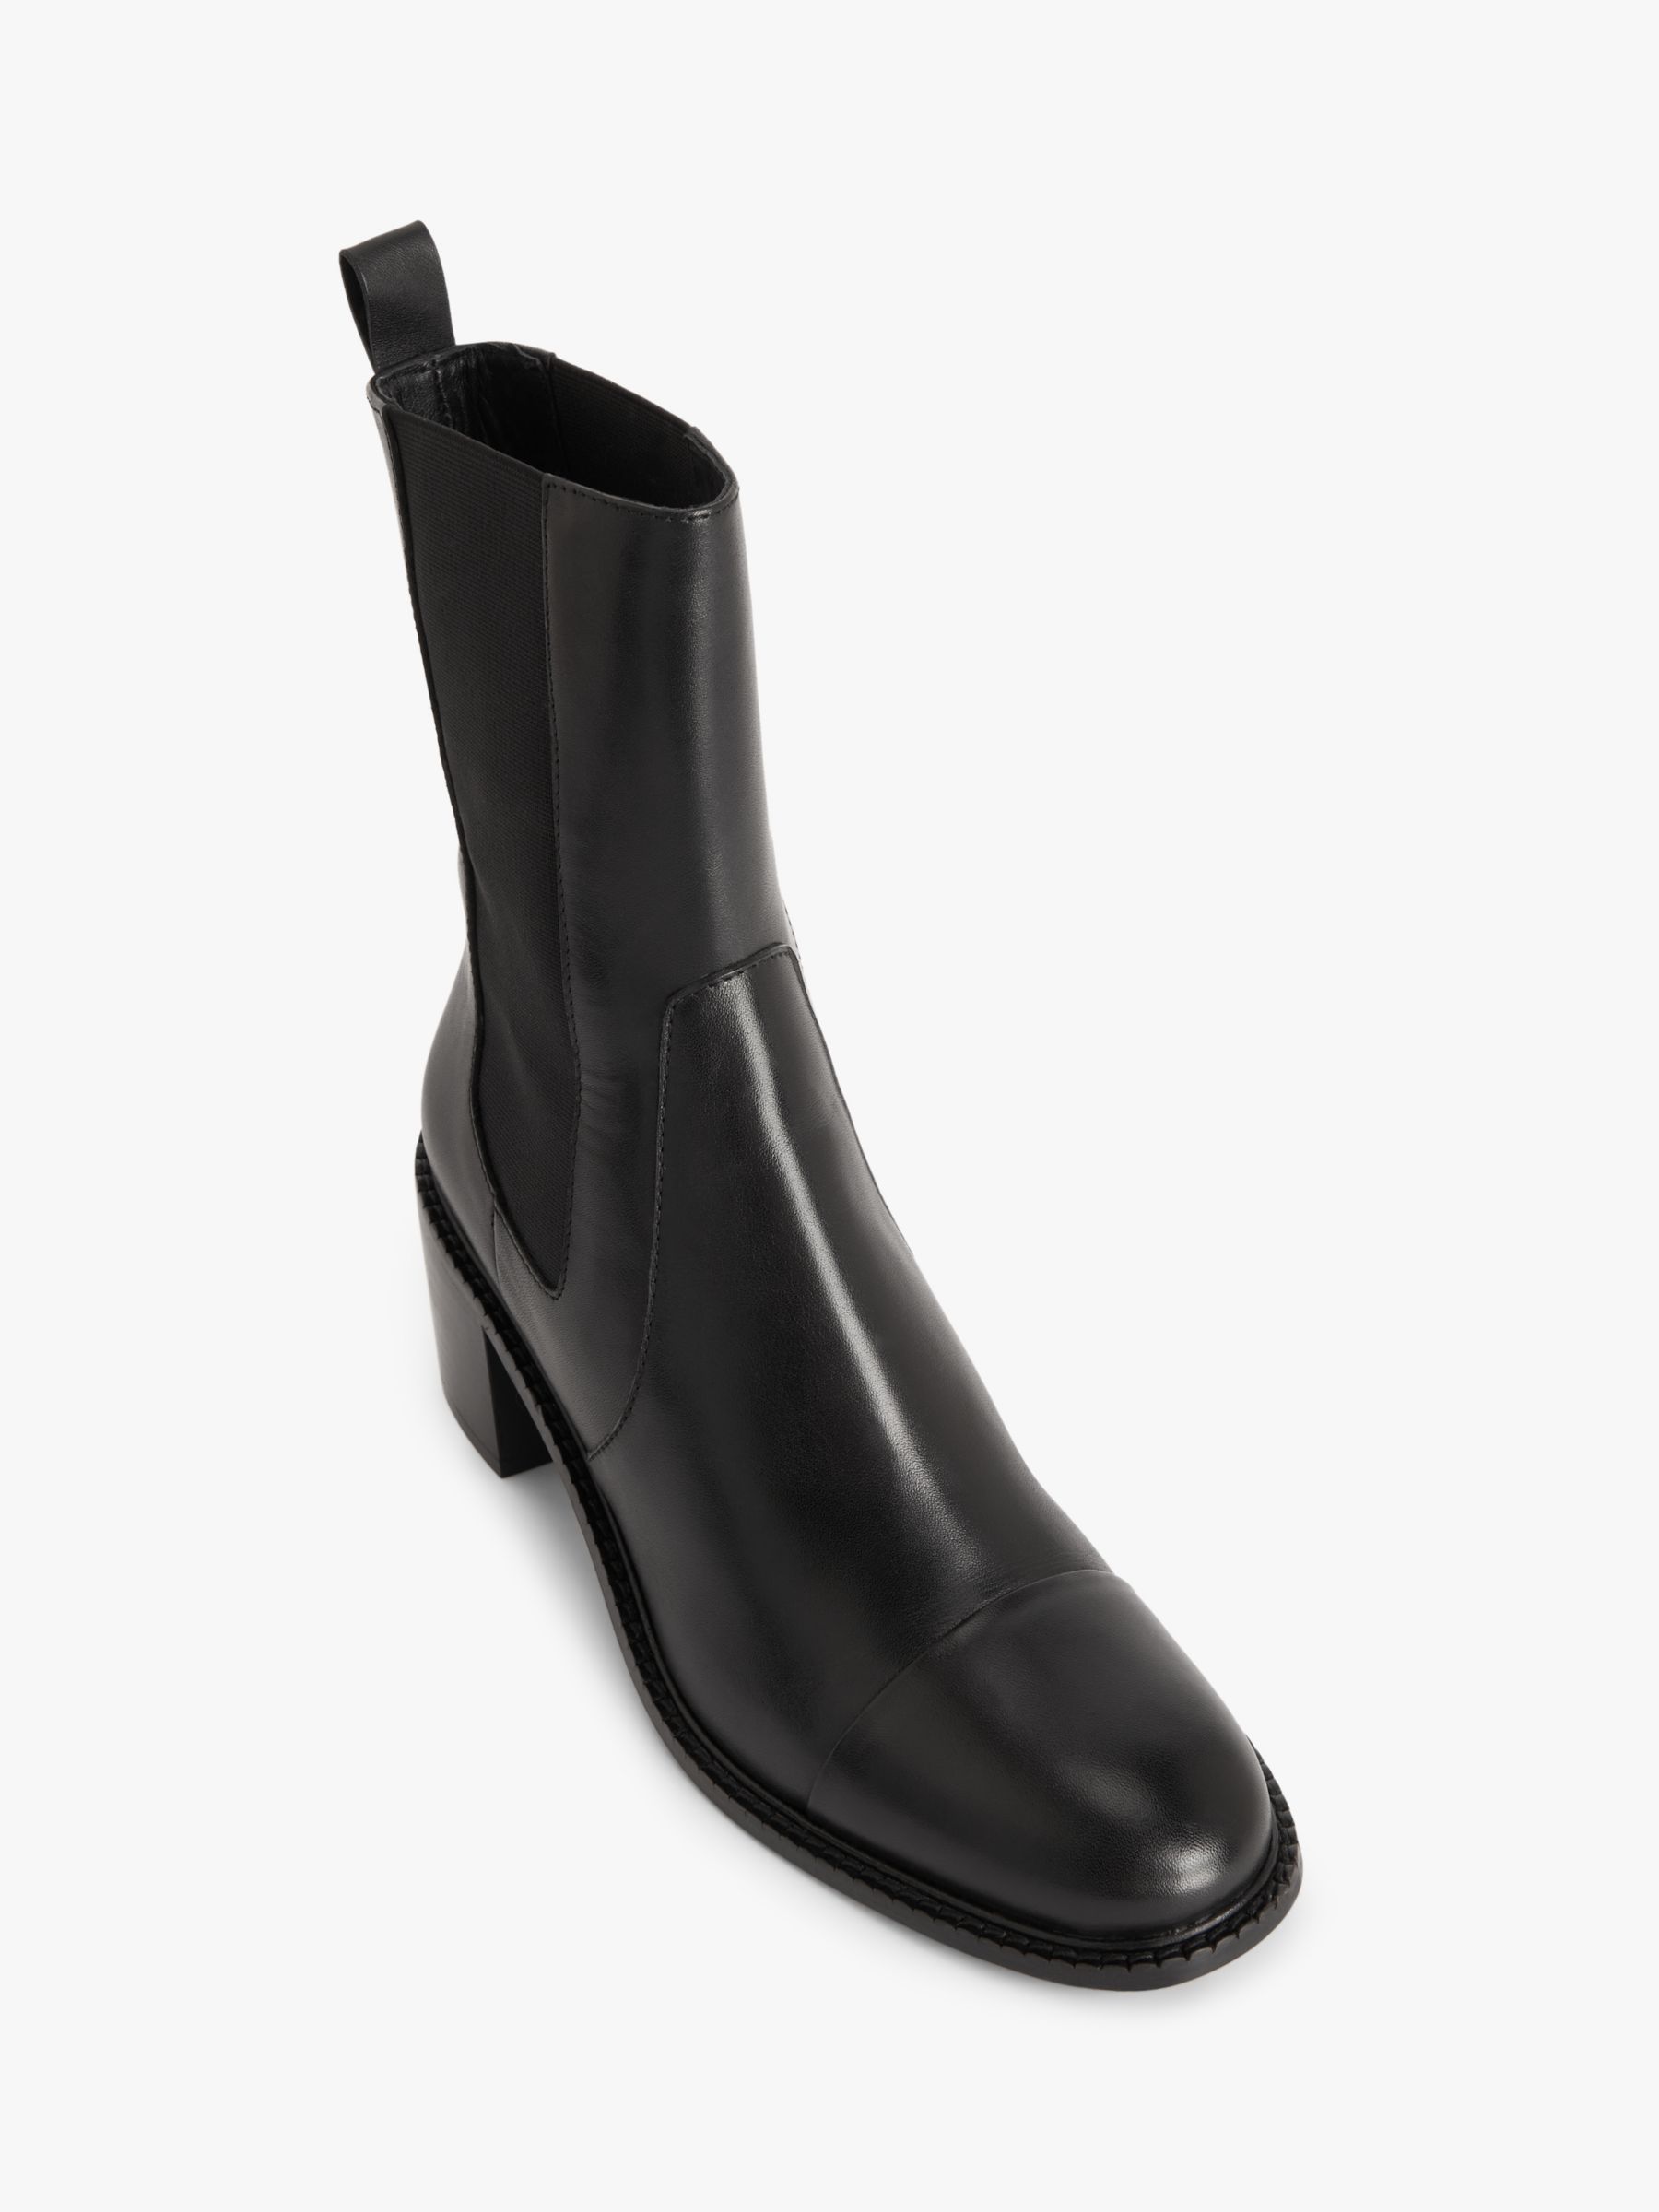 John Lewis Palomino Leather Toe Cap Heeled Chelsea Boots, Black, 6